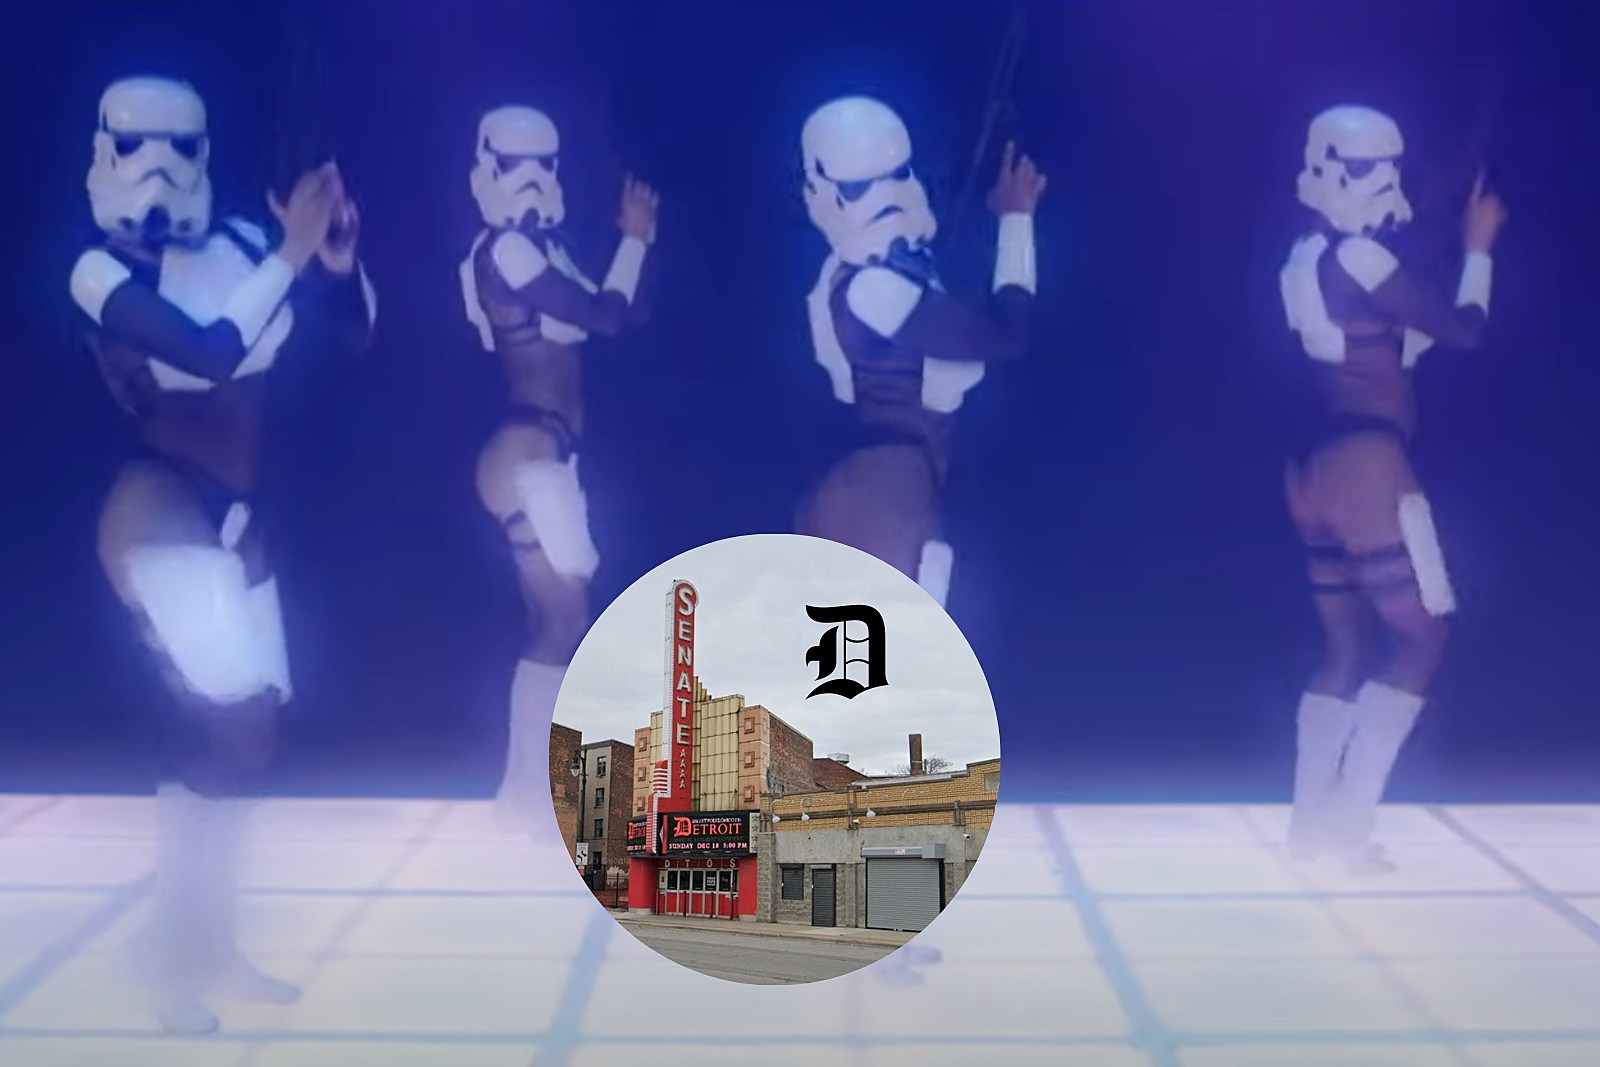 Star Wars Kitchen 2 Pack Mini Tong Set Darth Vader & Stormtrooper